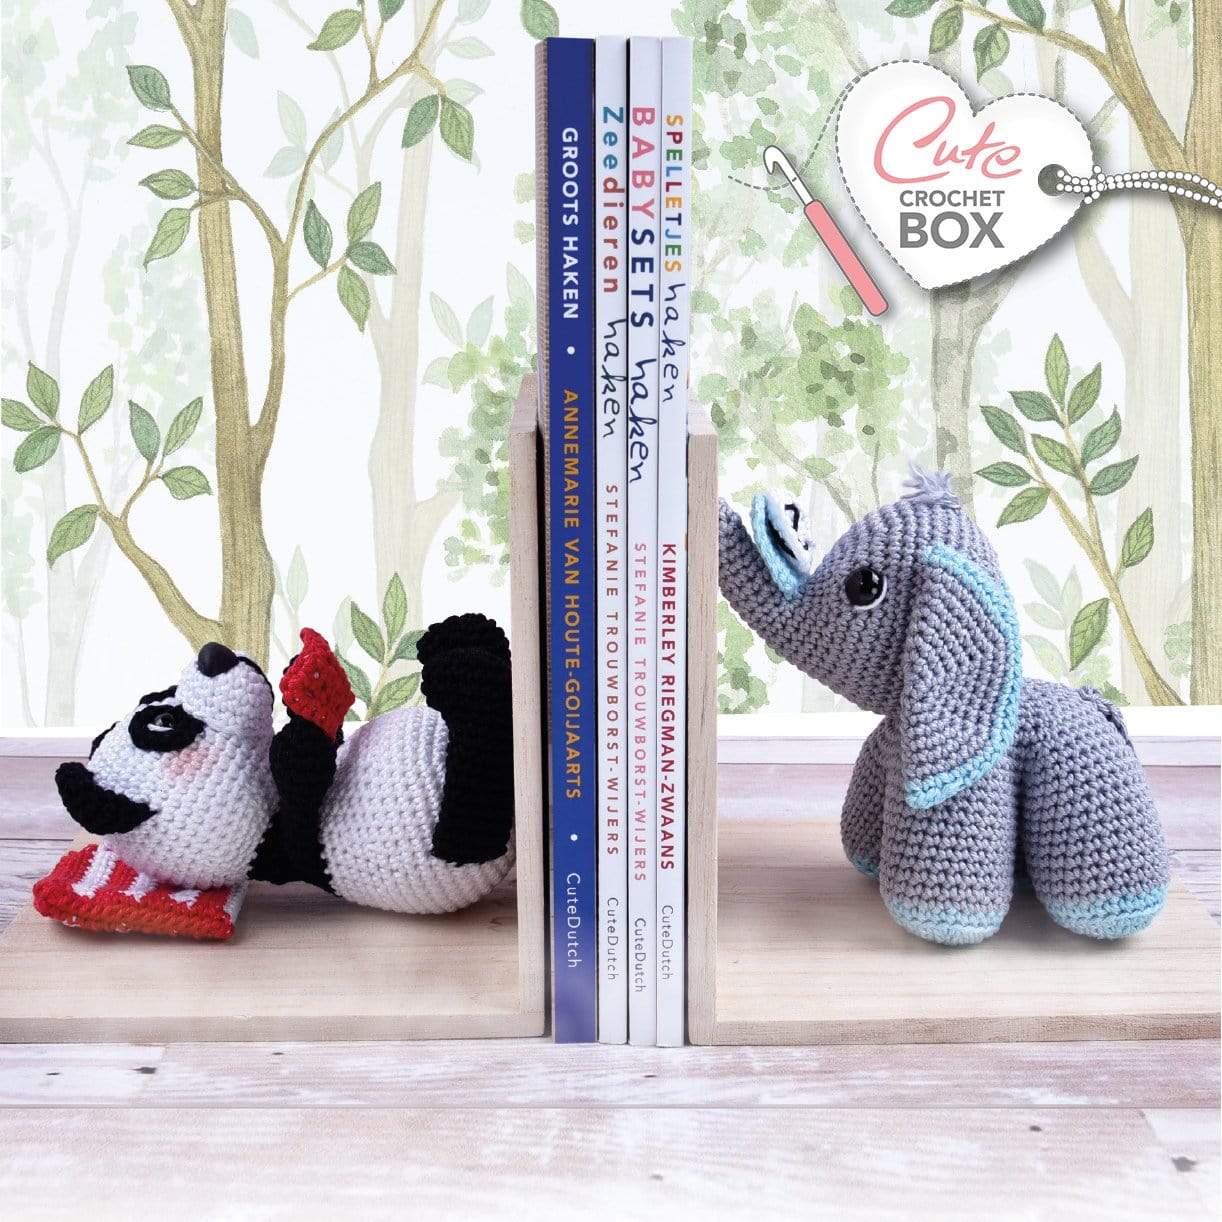 binair textuur kleinhandel Cute Crochet Box nr. 27 - Boekensteunen Panda & Olifant | CuteDutch